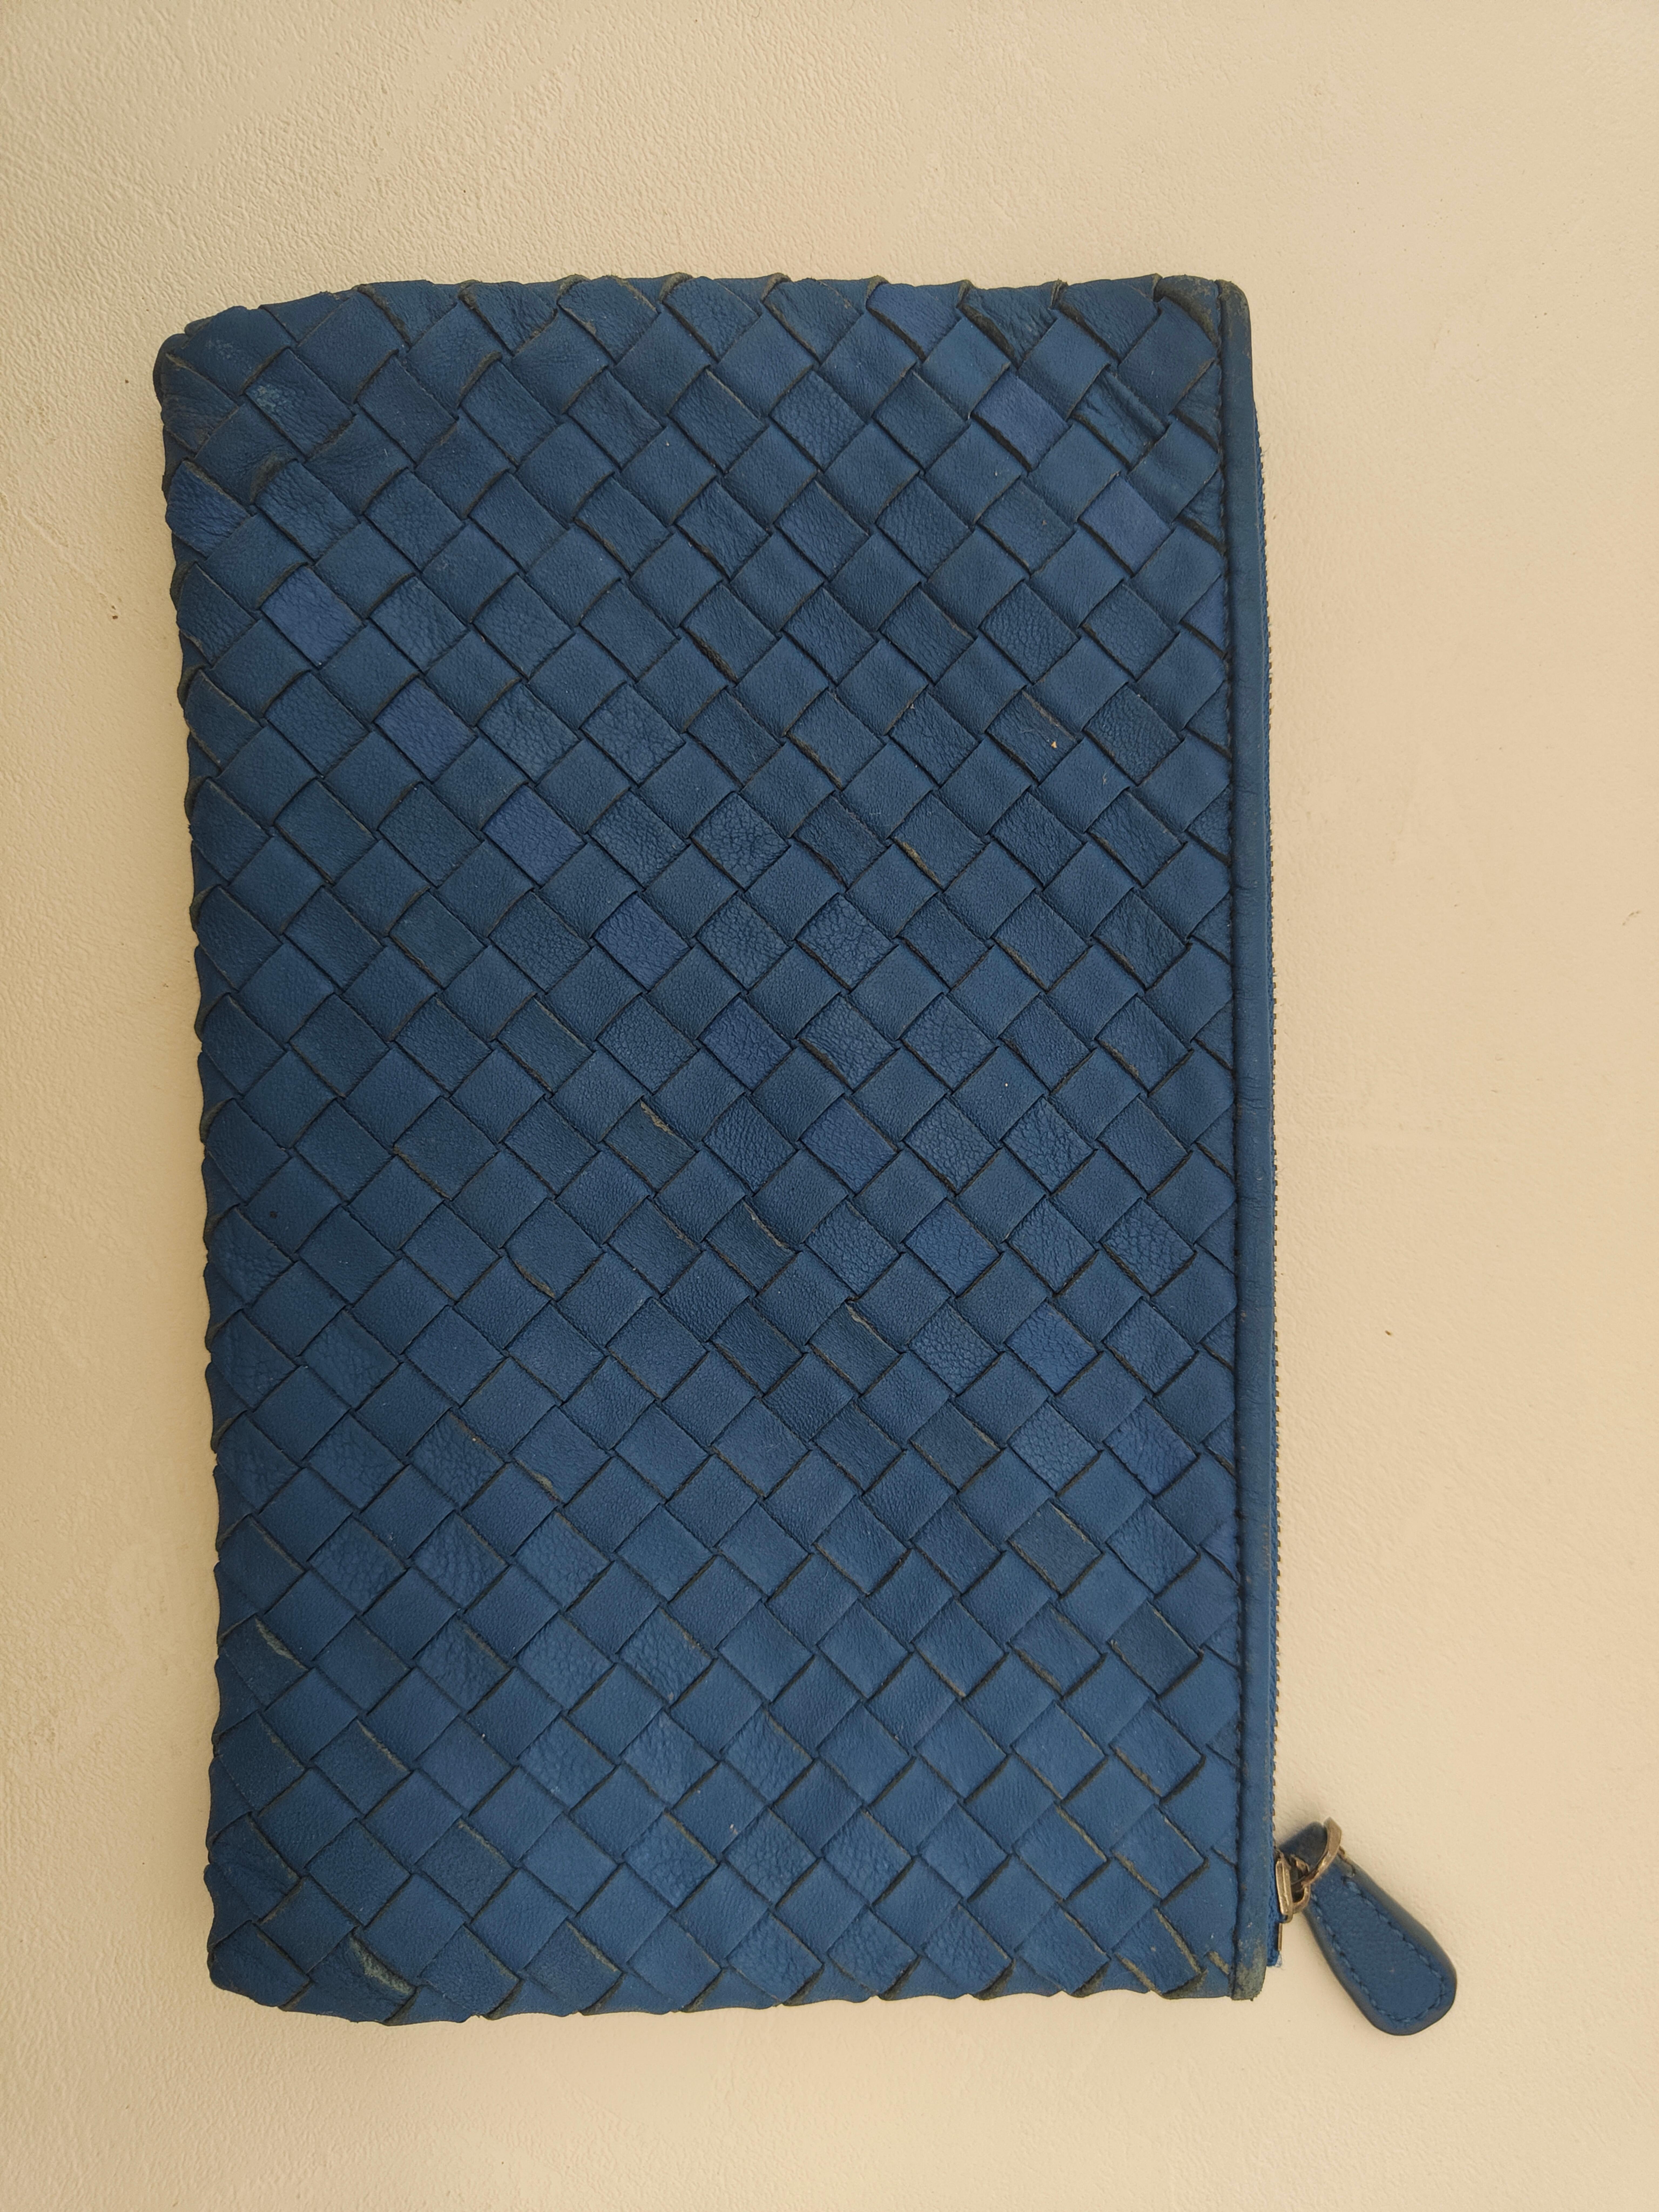 Botttega Veneta blue leather clutch wallet 4